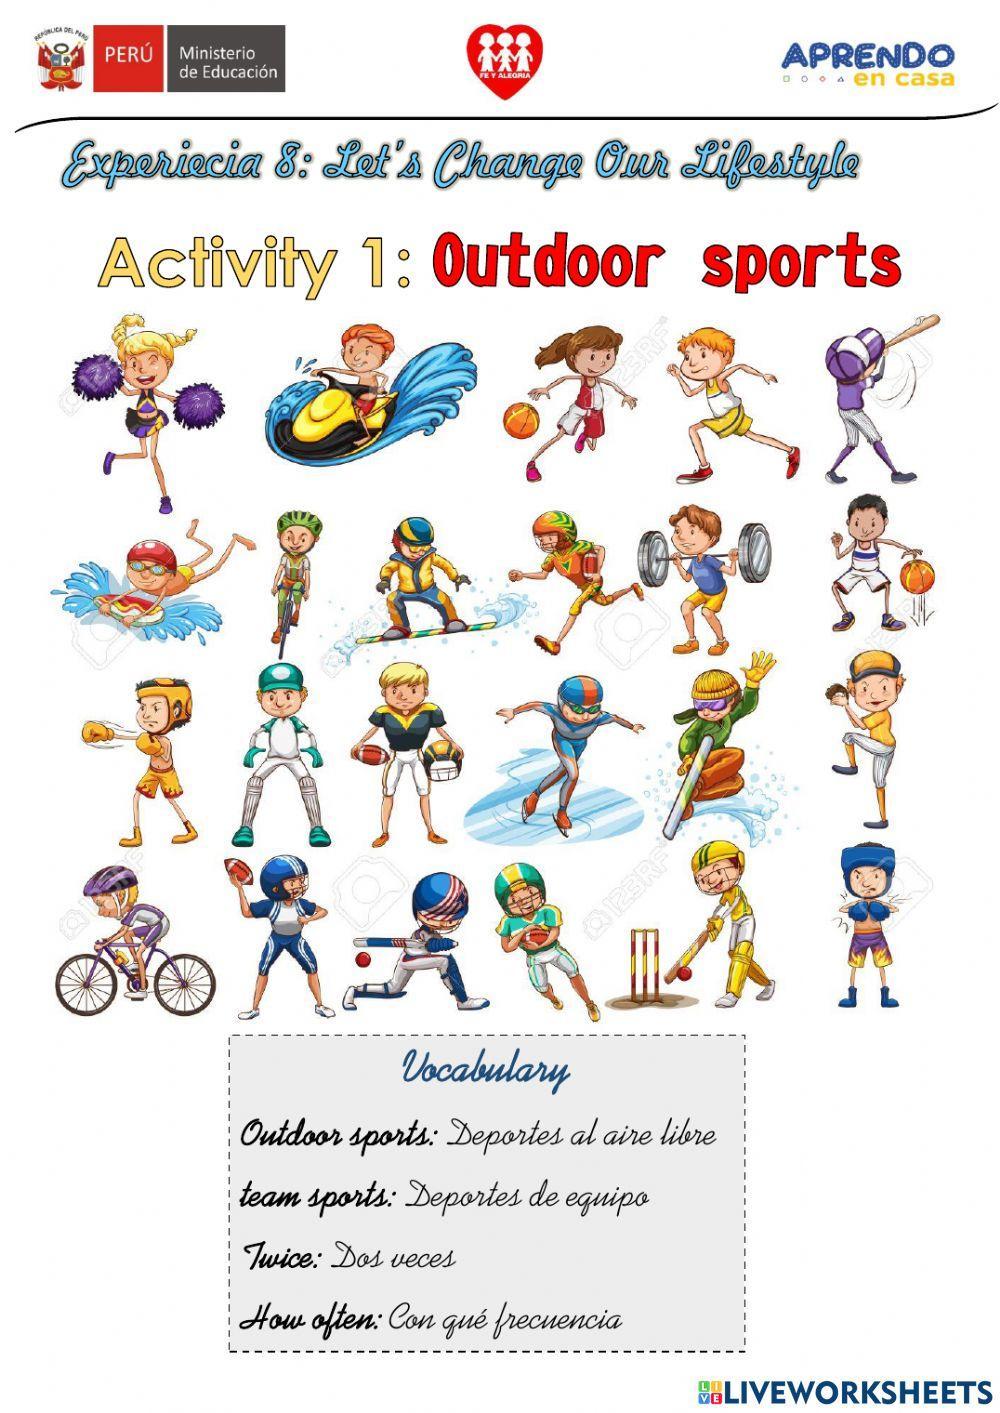 Activity 1: Outdoor sports